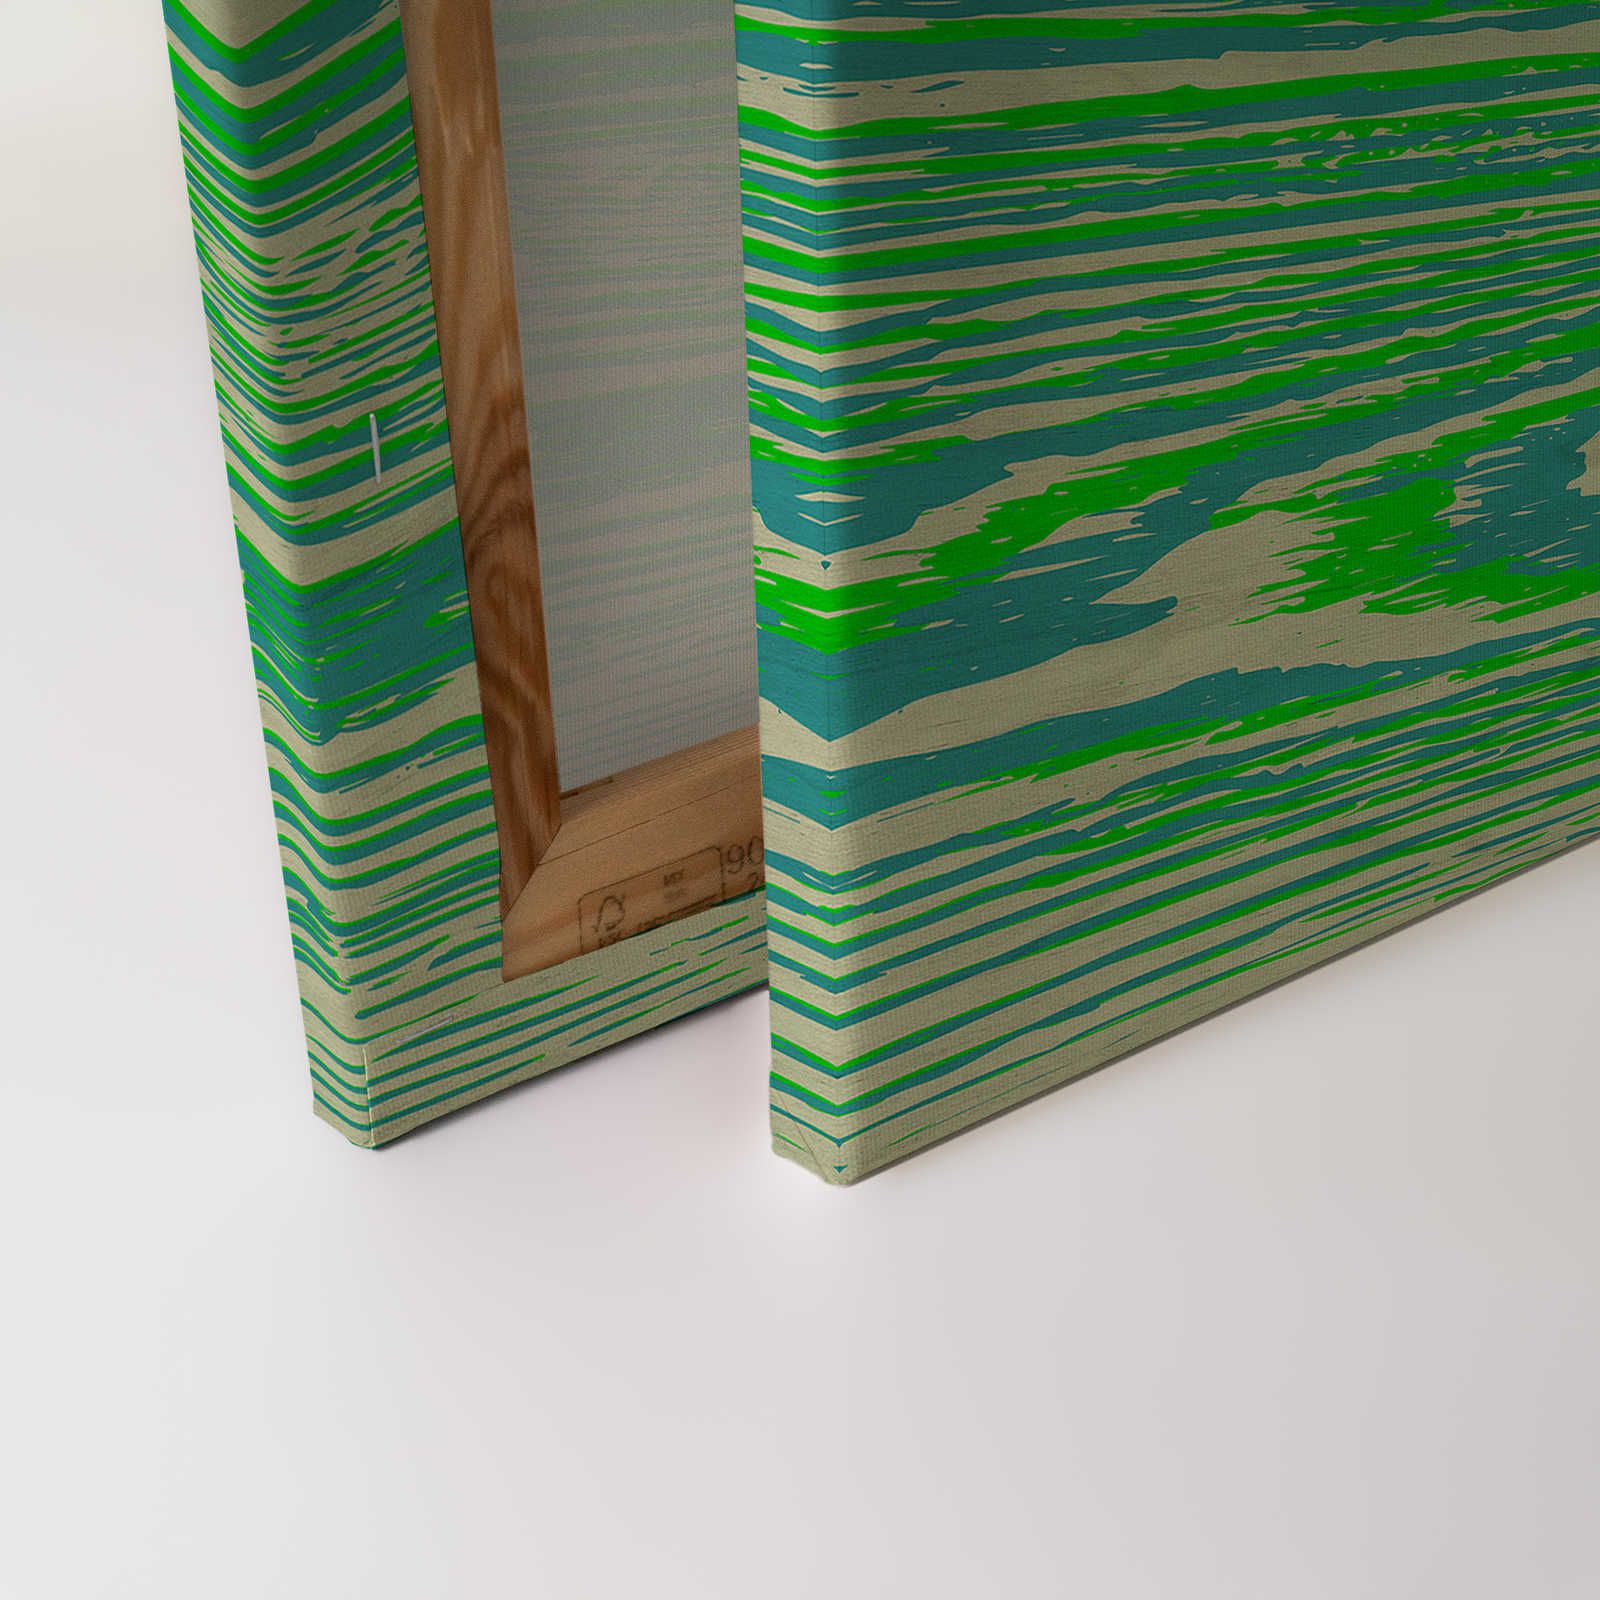             Bounty 1 - Neongrünes Leinwandbild Holzoptik Design – 0,90 m x 0,60 m
        